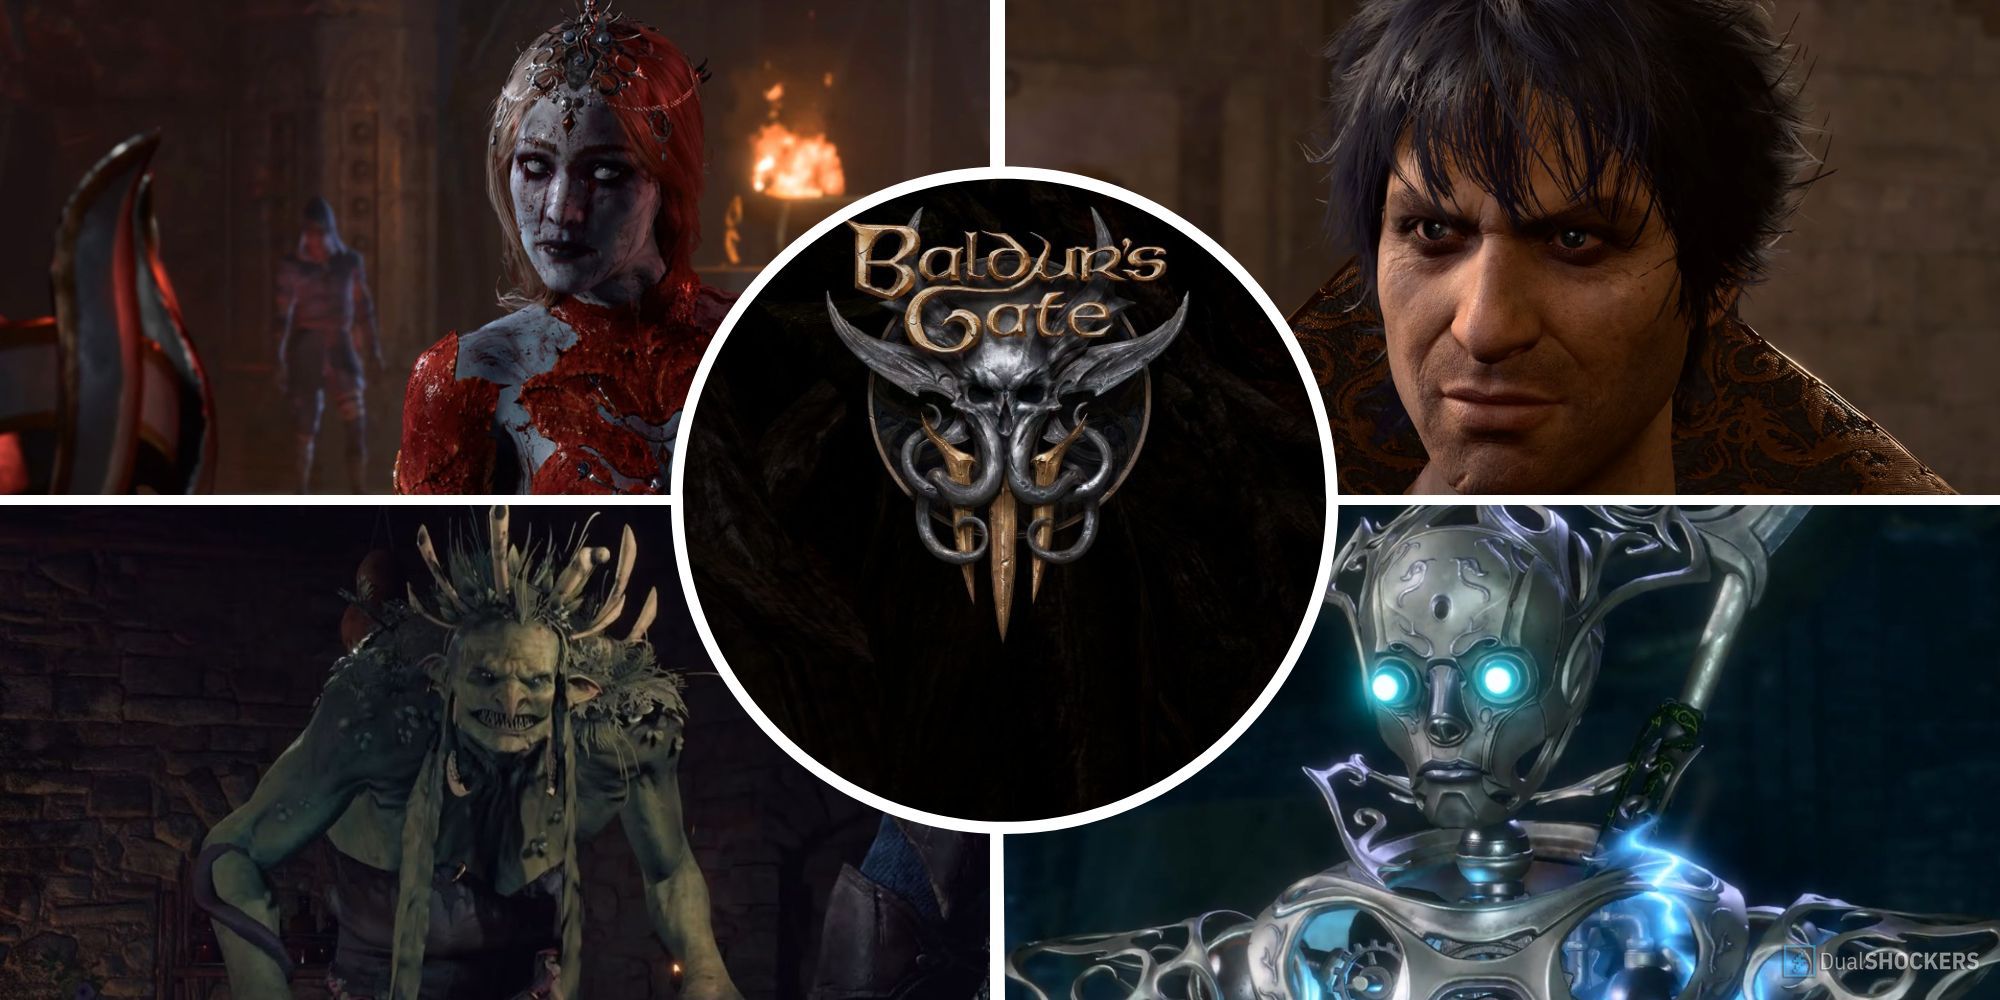 5 hardest bosses to beat in Baldur's Gate 3